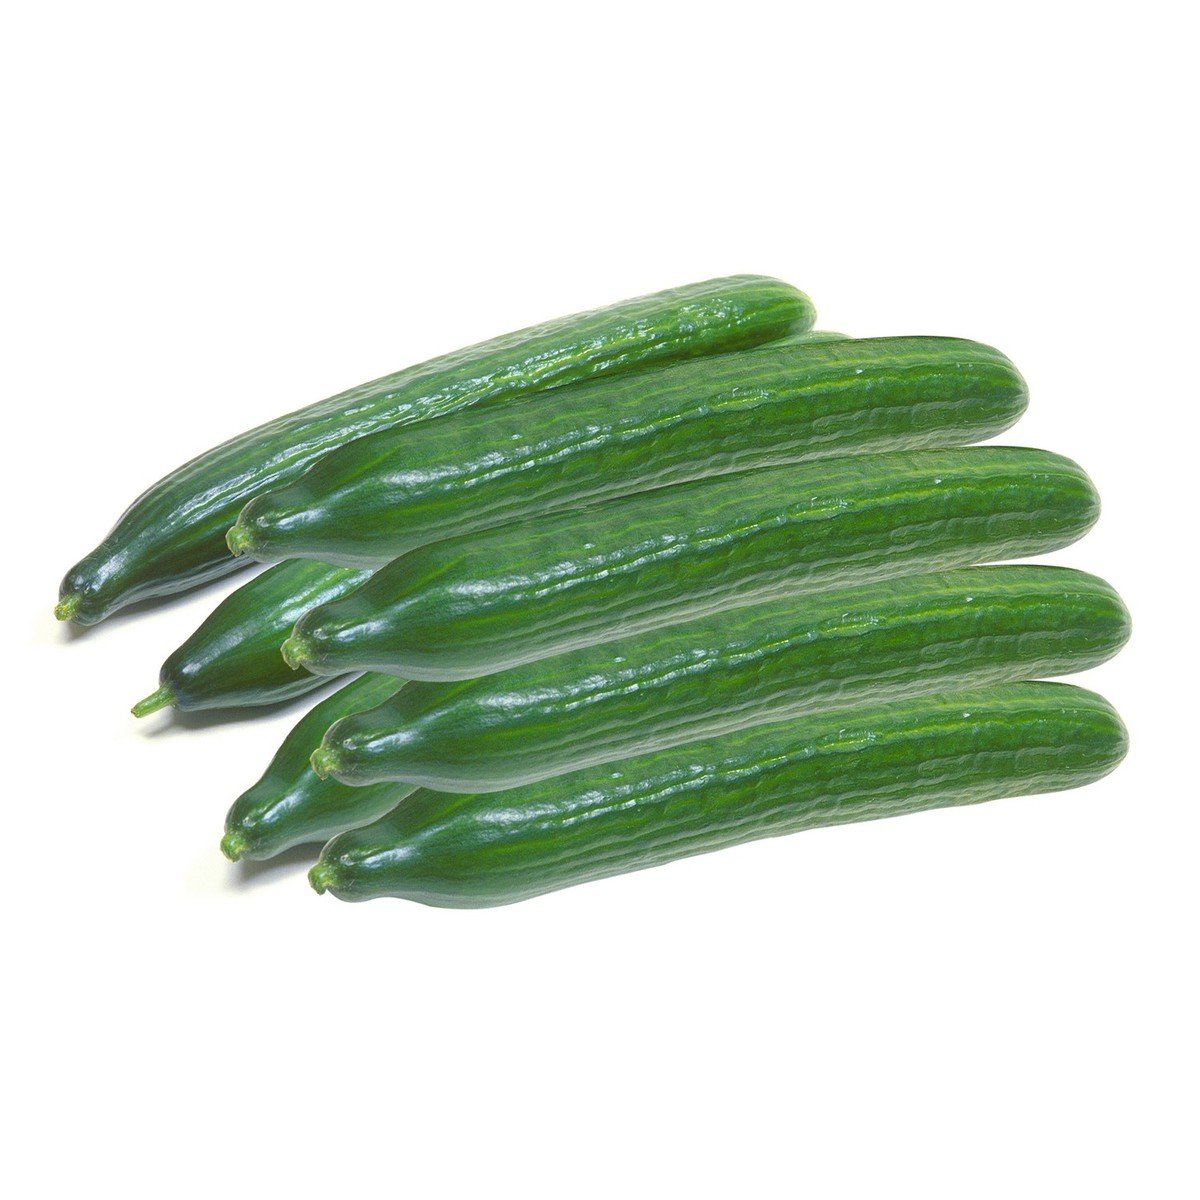 Cucumber Holland 1 kg